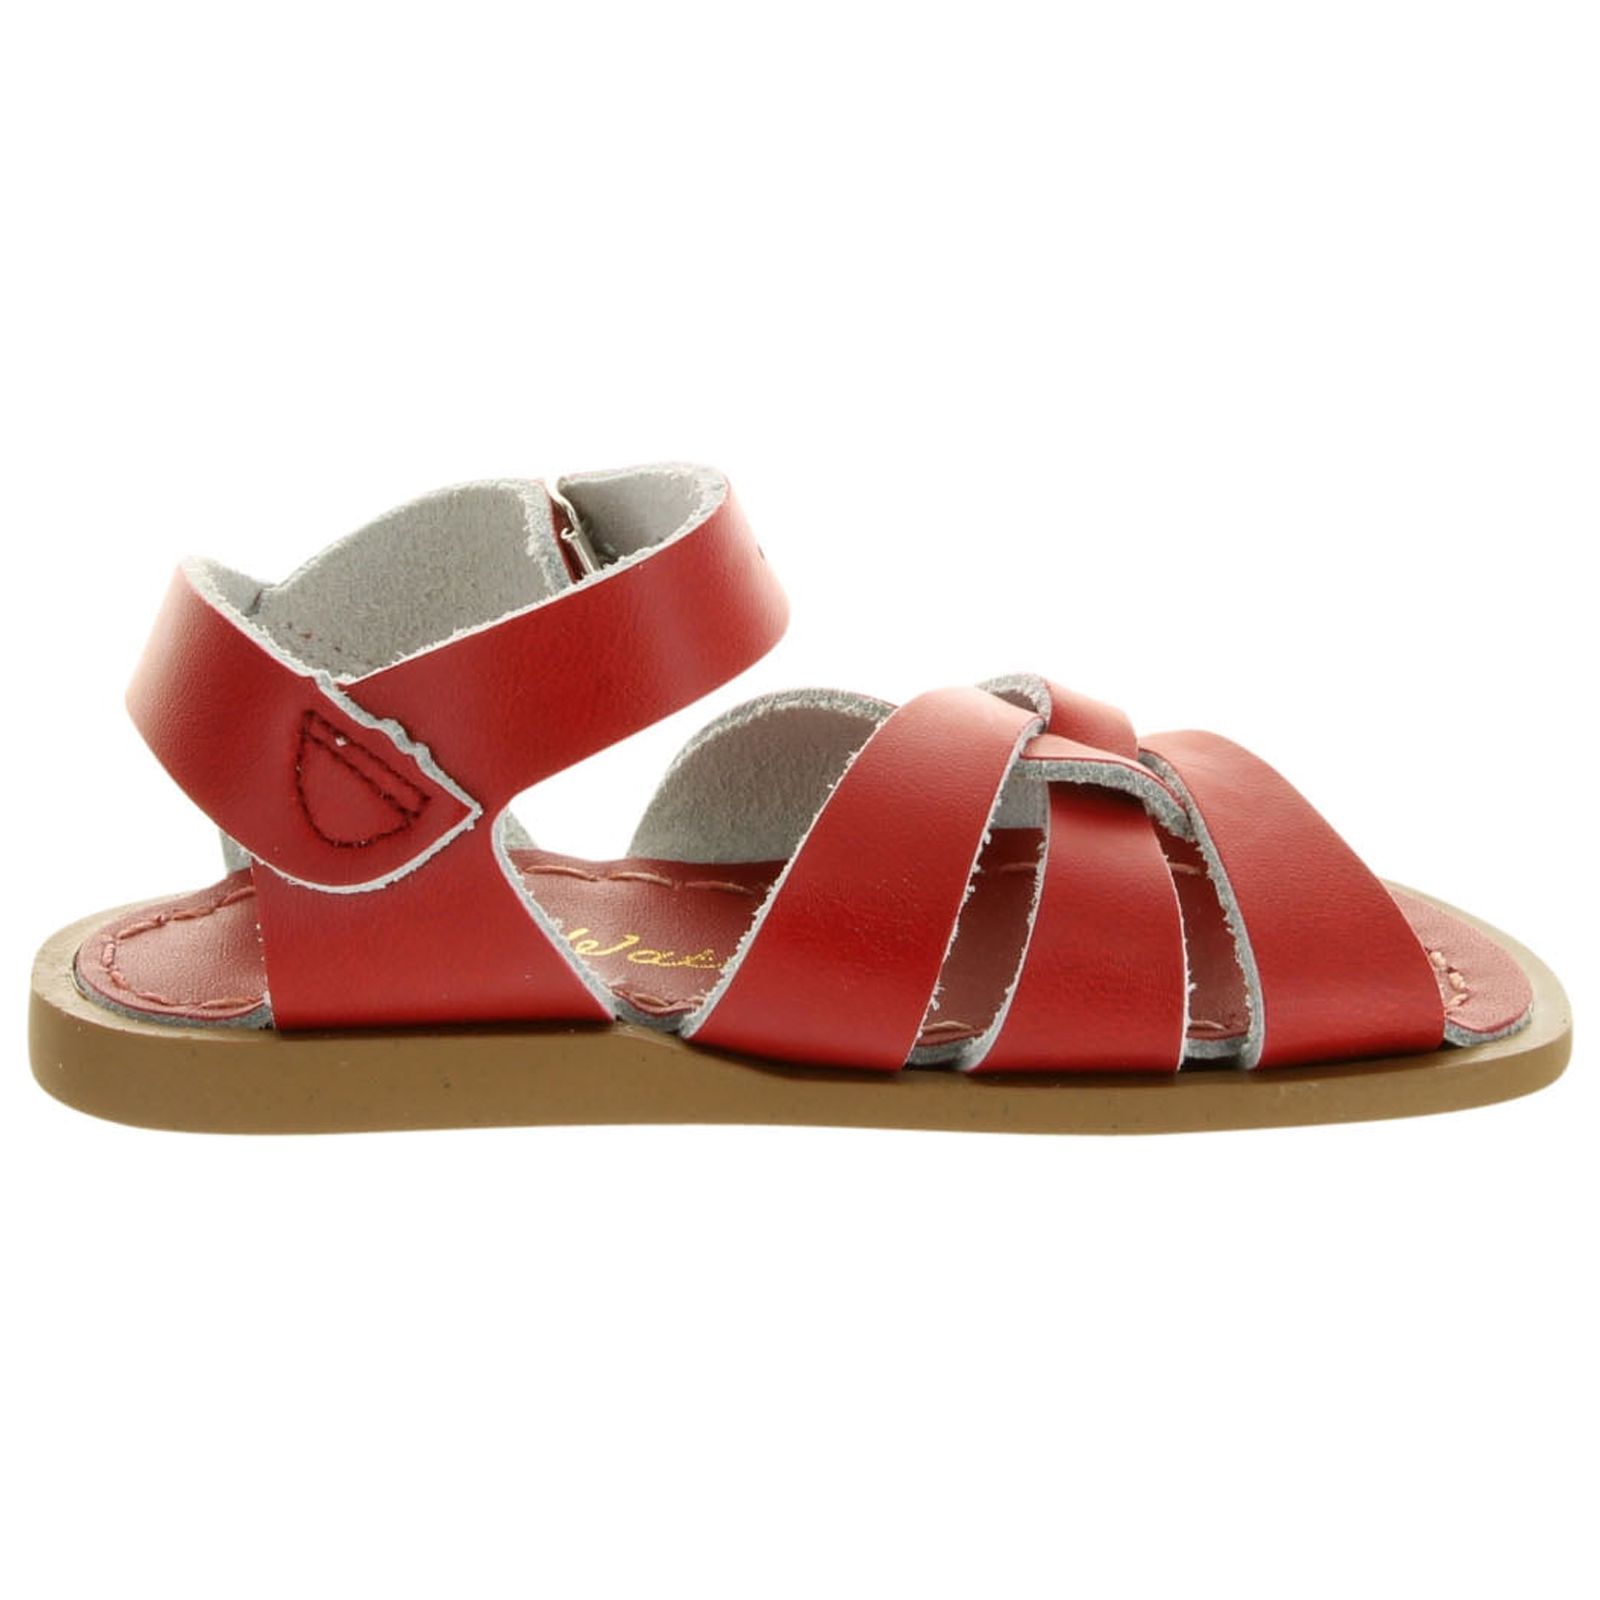 Salt Water Sandals by Hoy Shoe Original Sandal - Red - Little Kid 12 - 884-RED-12 - image 2 of 4